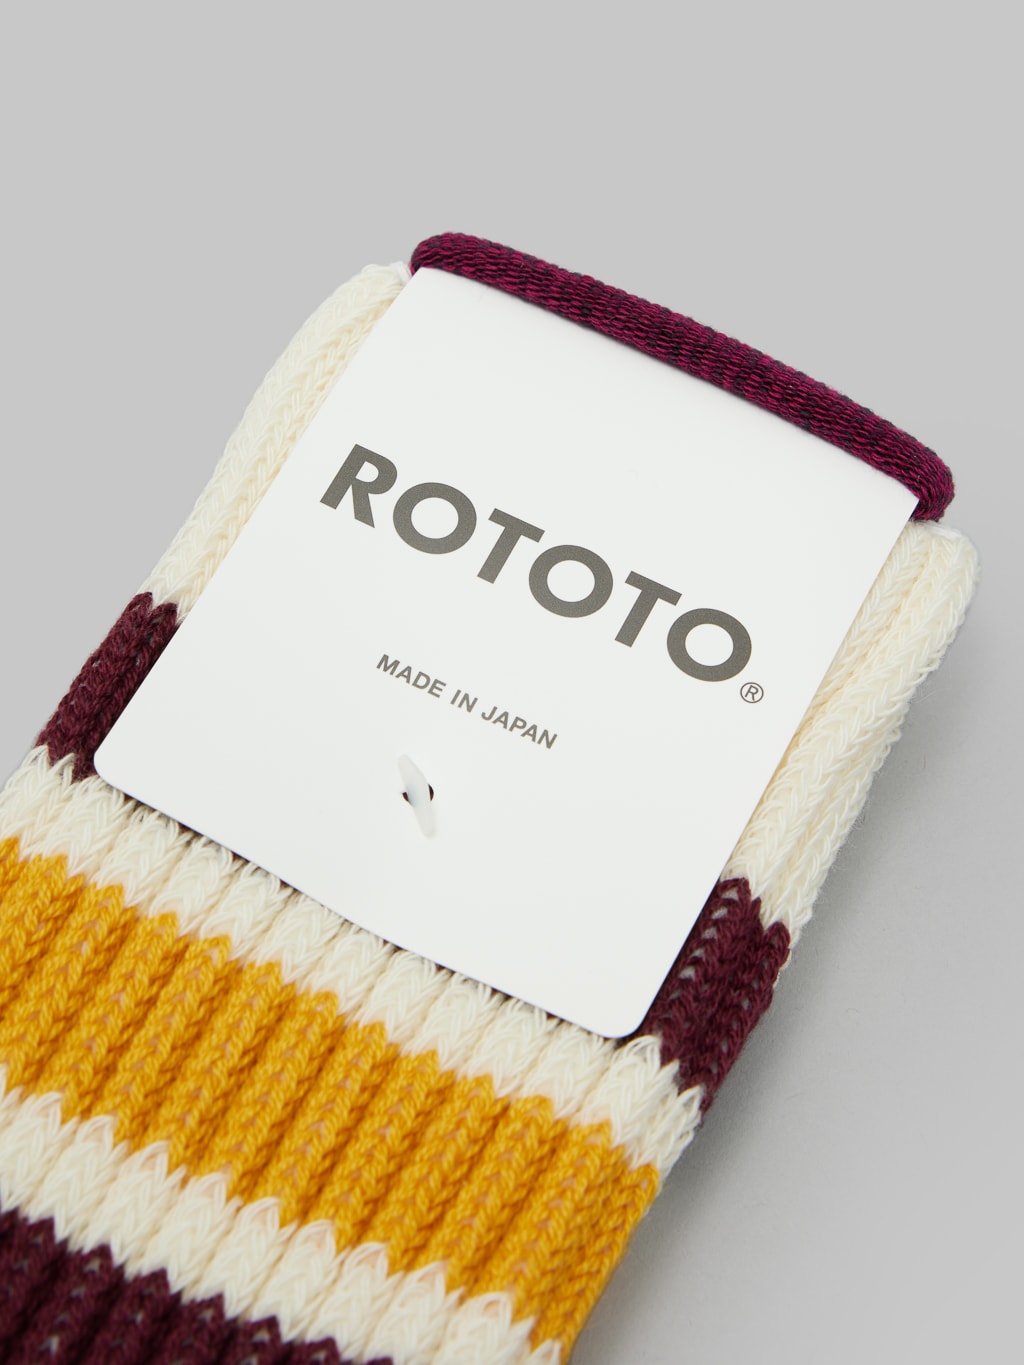 rototo coarse ribbed oldschool crew socks bordeaux yellow brand label